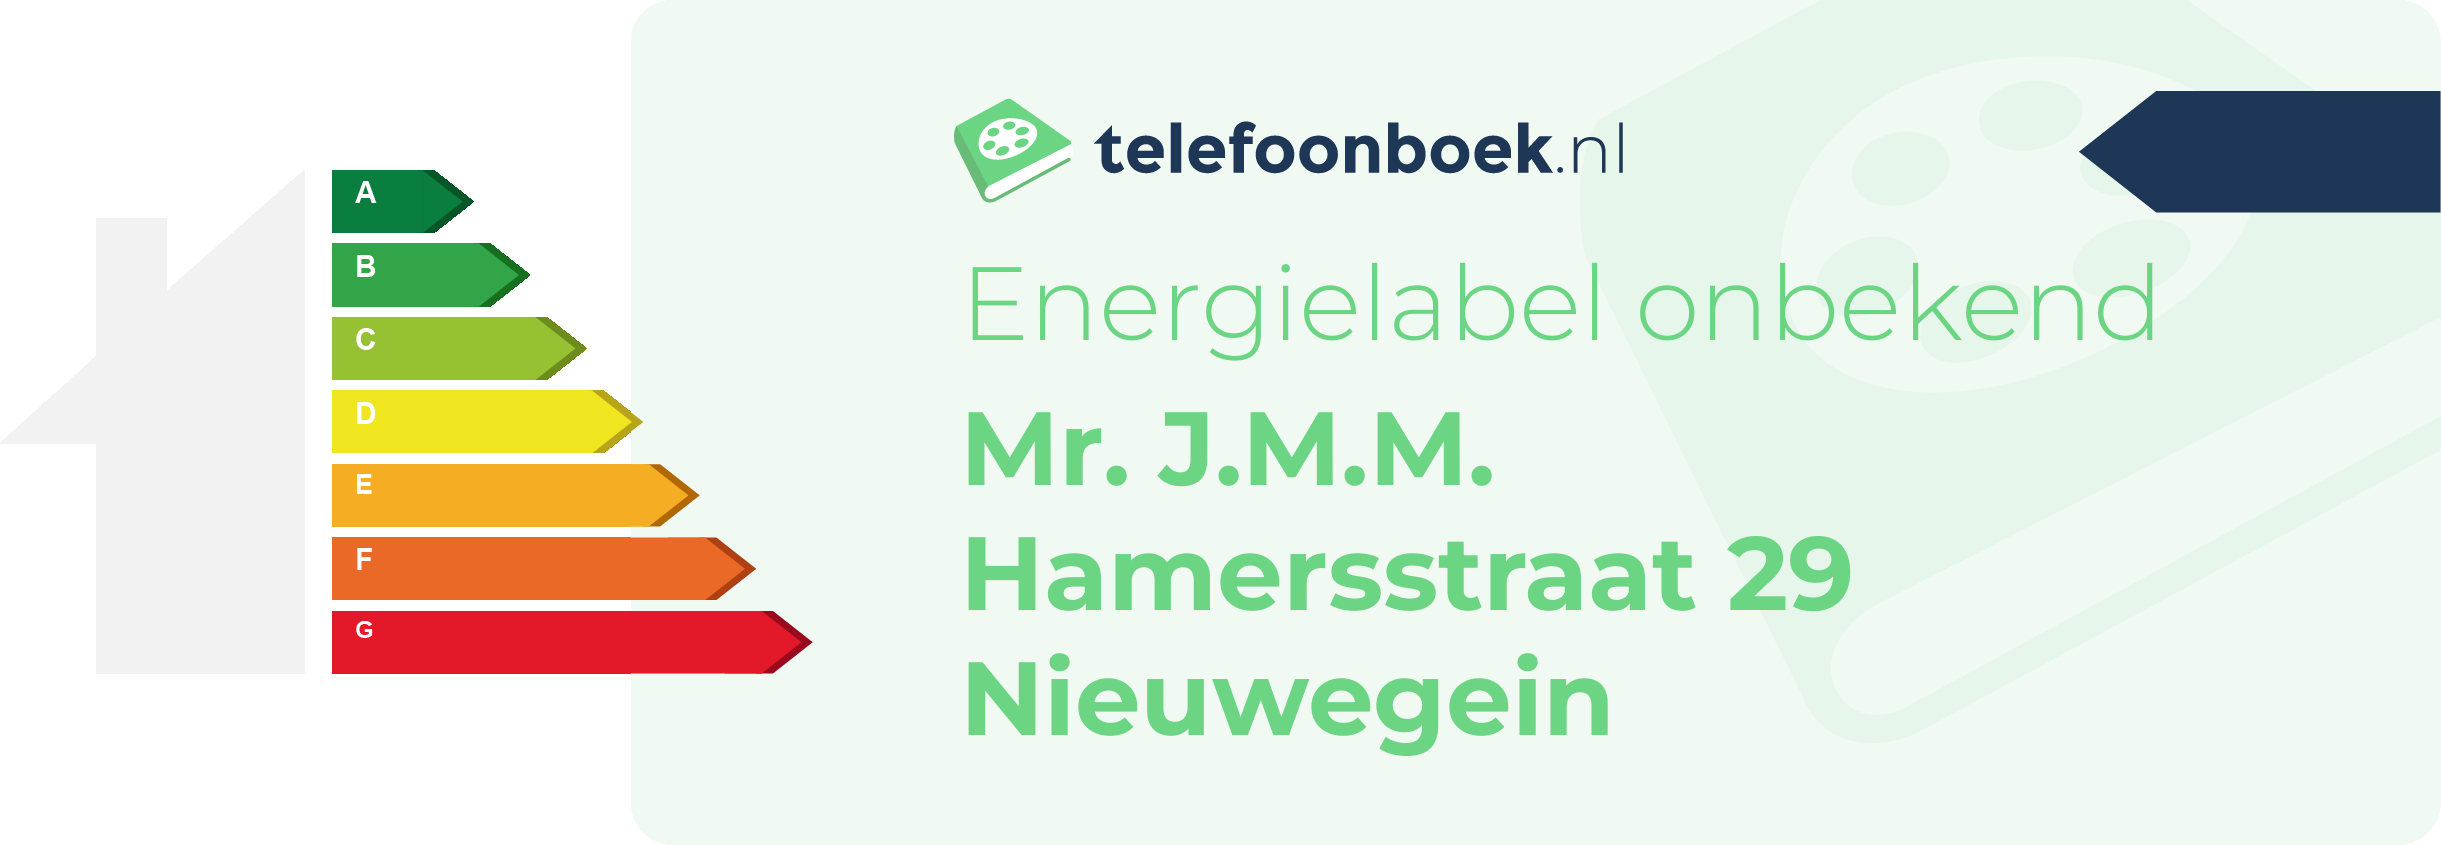 Energielabel Mr. J.M.M. Hamersstraat 29 Nieuwegein